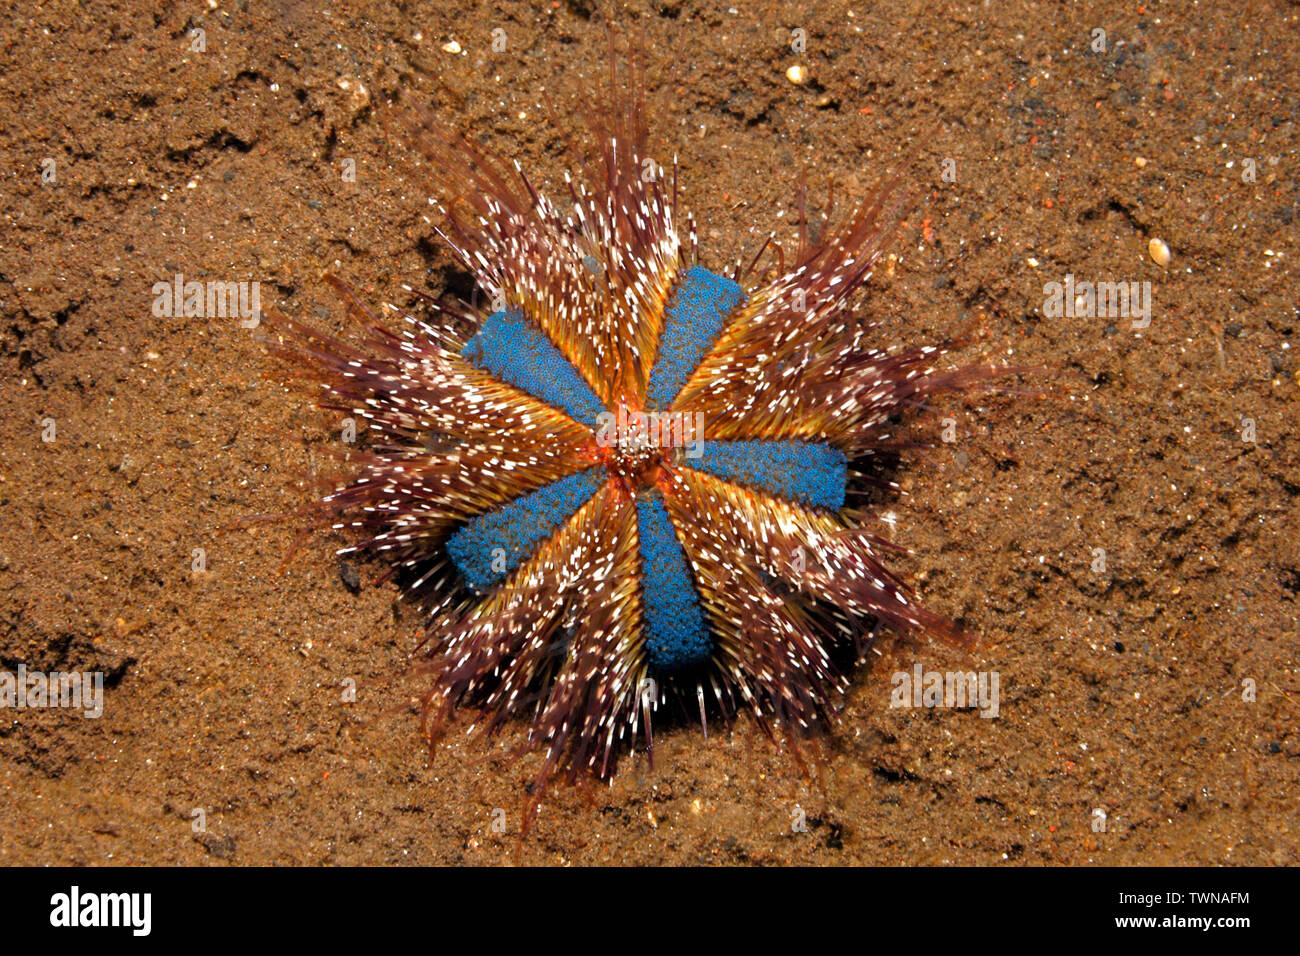 Blue Tuxedo Urchin, Globular Urchin, Globe Urchin, or Jewel-box Sea Urchin, Mespilia globulus. Tulamben, Bali, Indonesia. Bali Sea, Indian Ocean Stock Photo